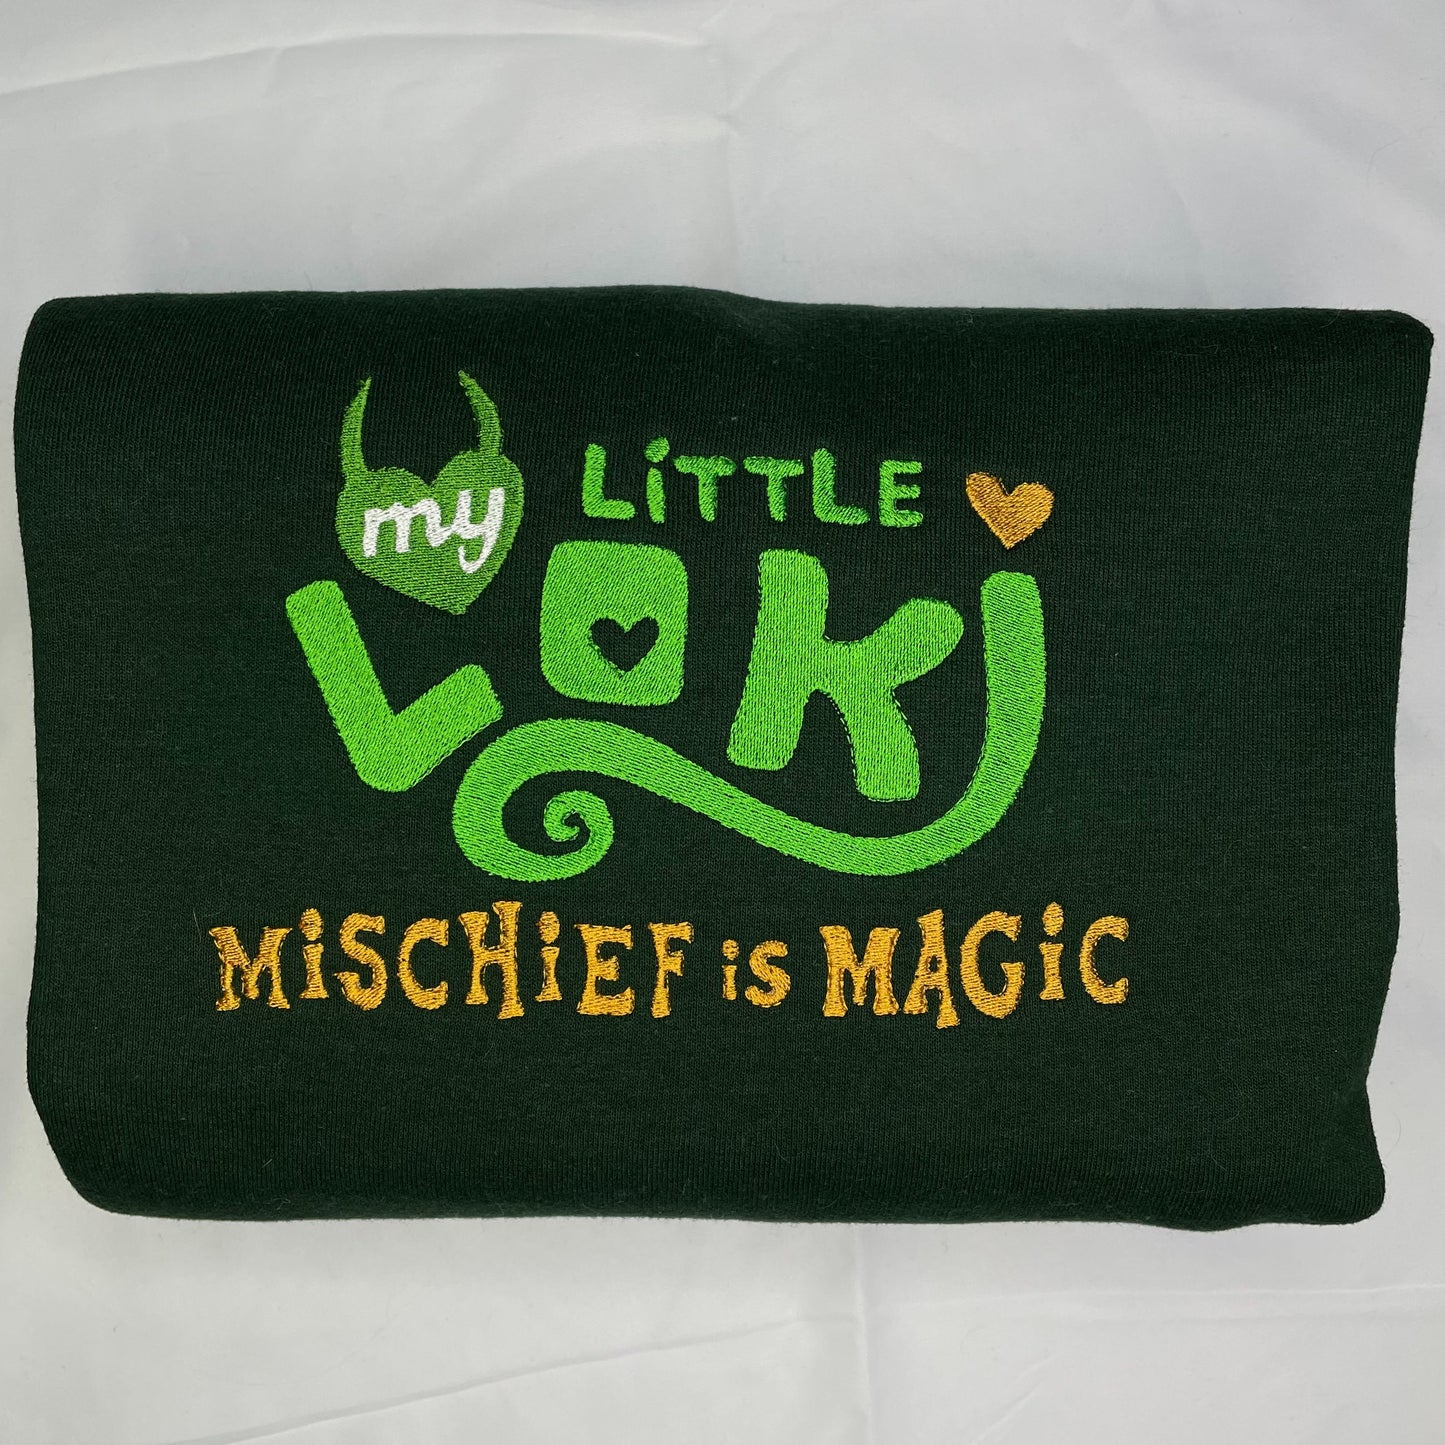 My Little Loki “Mischief is Magic” Embroidered Crewneck